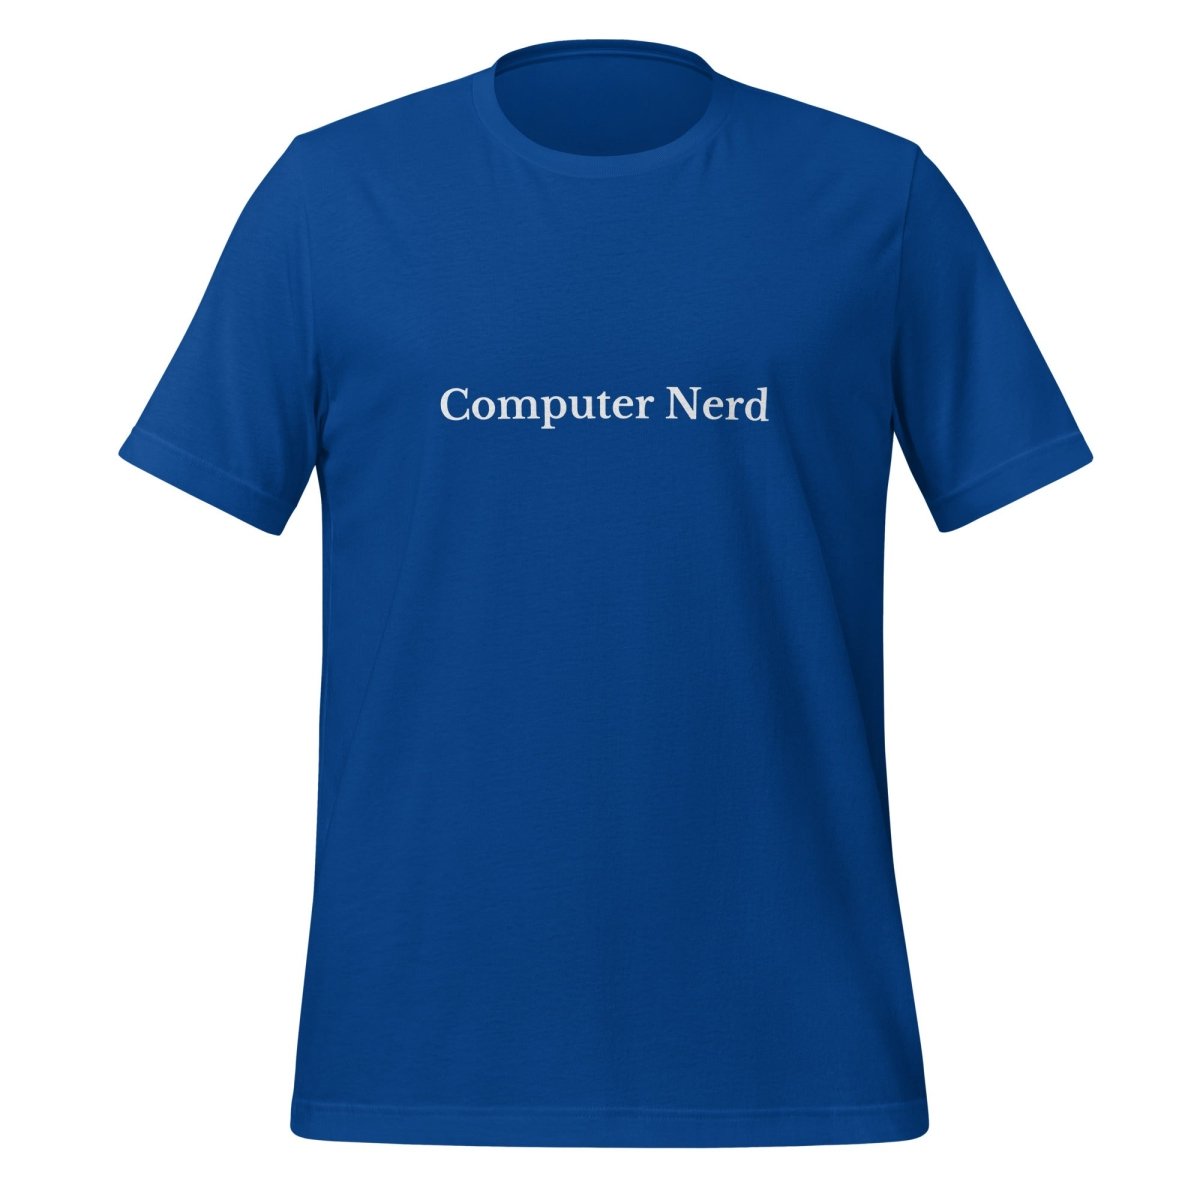 Computer Nerd T - Shirt (unisex) - True Royal - AI Store